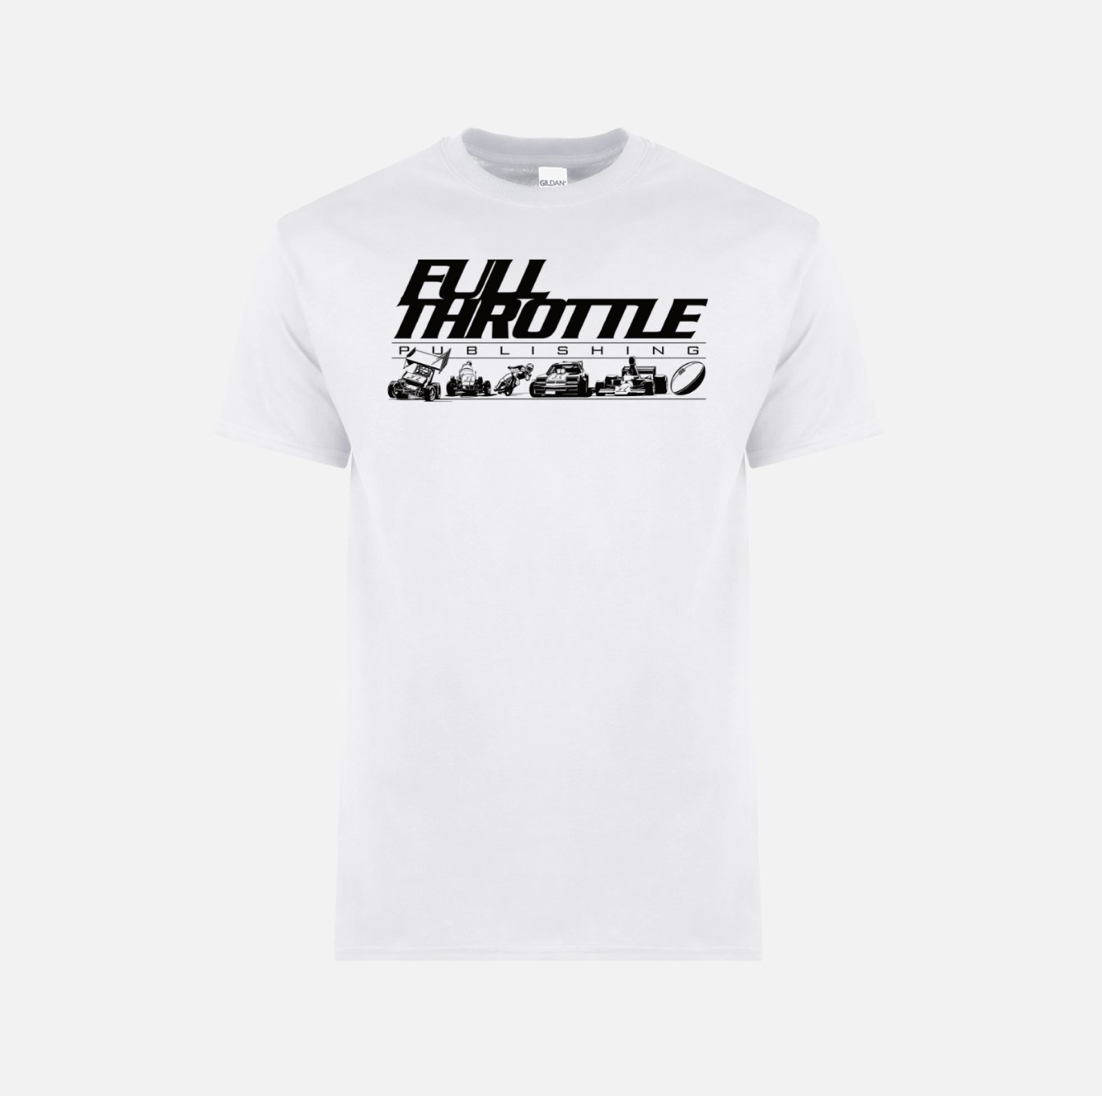 Full Throttle Publishing T-Shirt - White